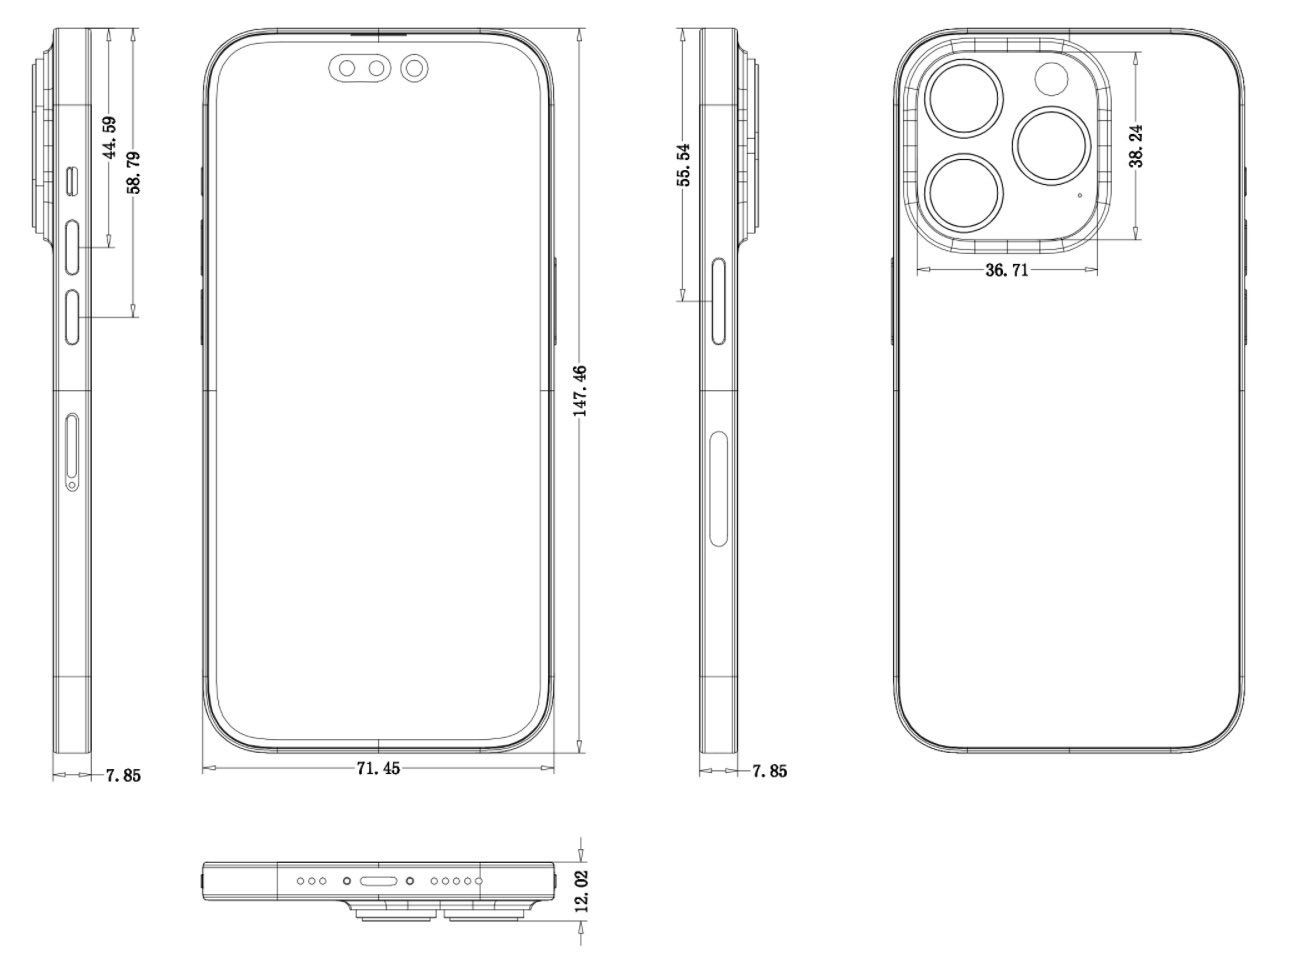 iPhone 14 pro 8 - شماتیک های آیفون 14 پرو و آیفون 14 پرو مکس، طراحی کلی ضخیم تر را با برآمدگی دوربین بزرگتر نشان می دهد